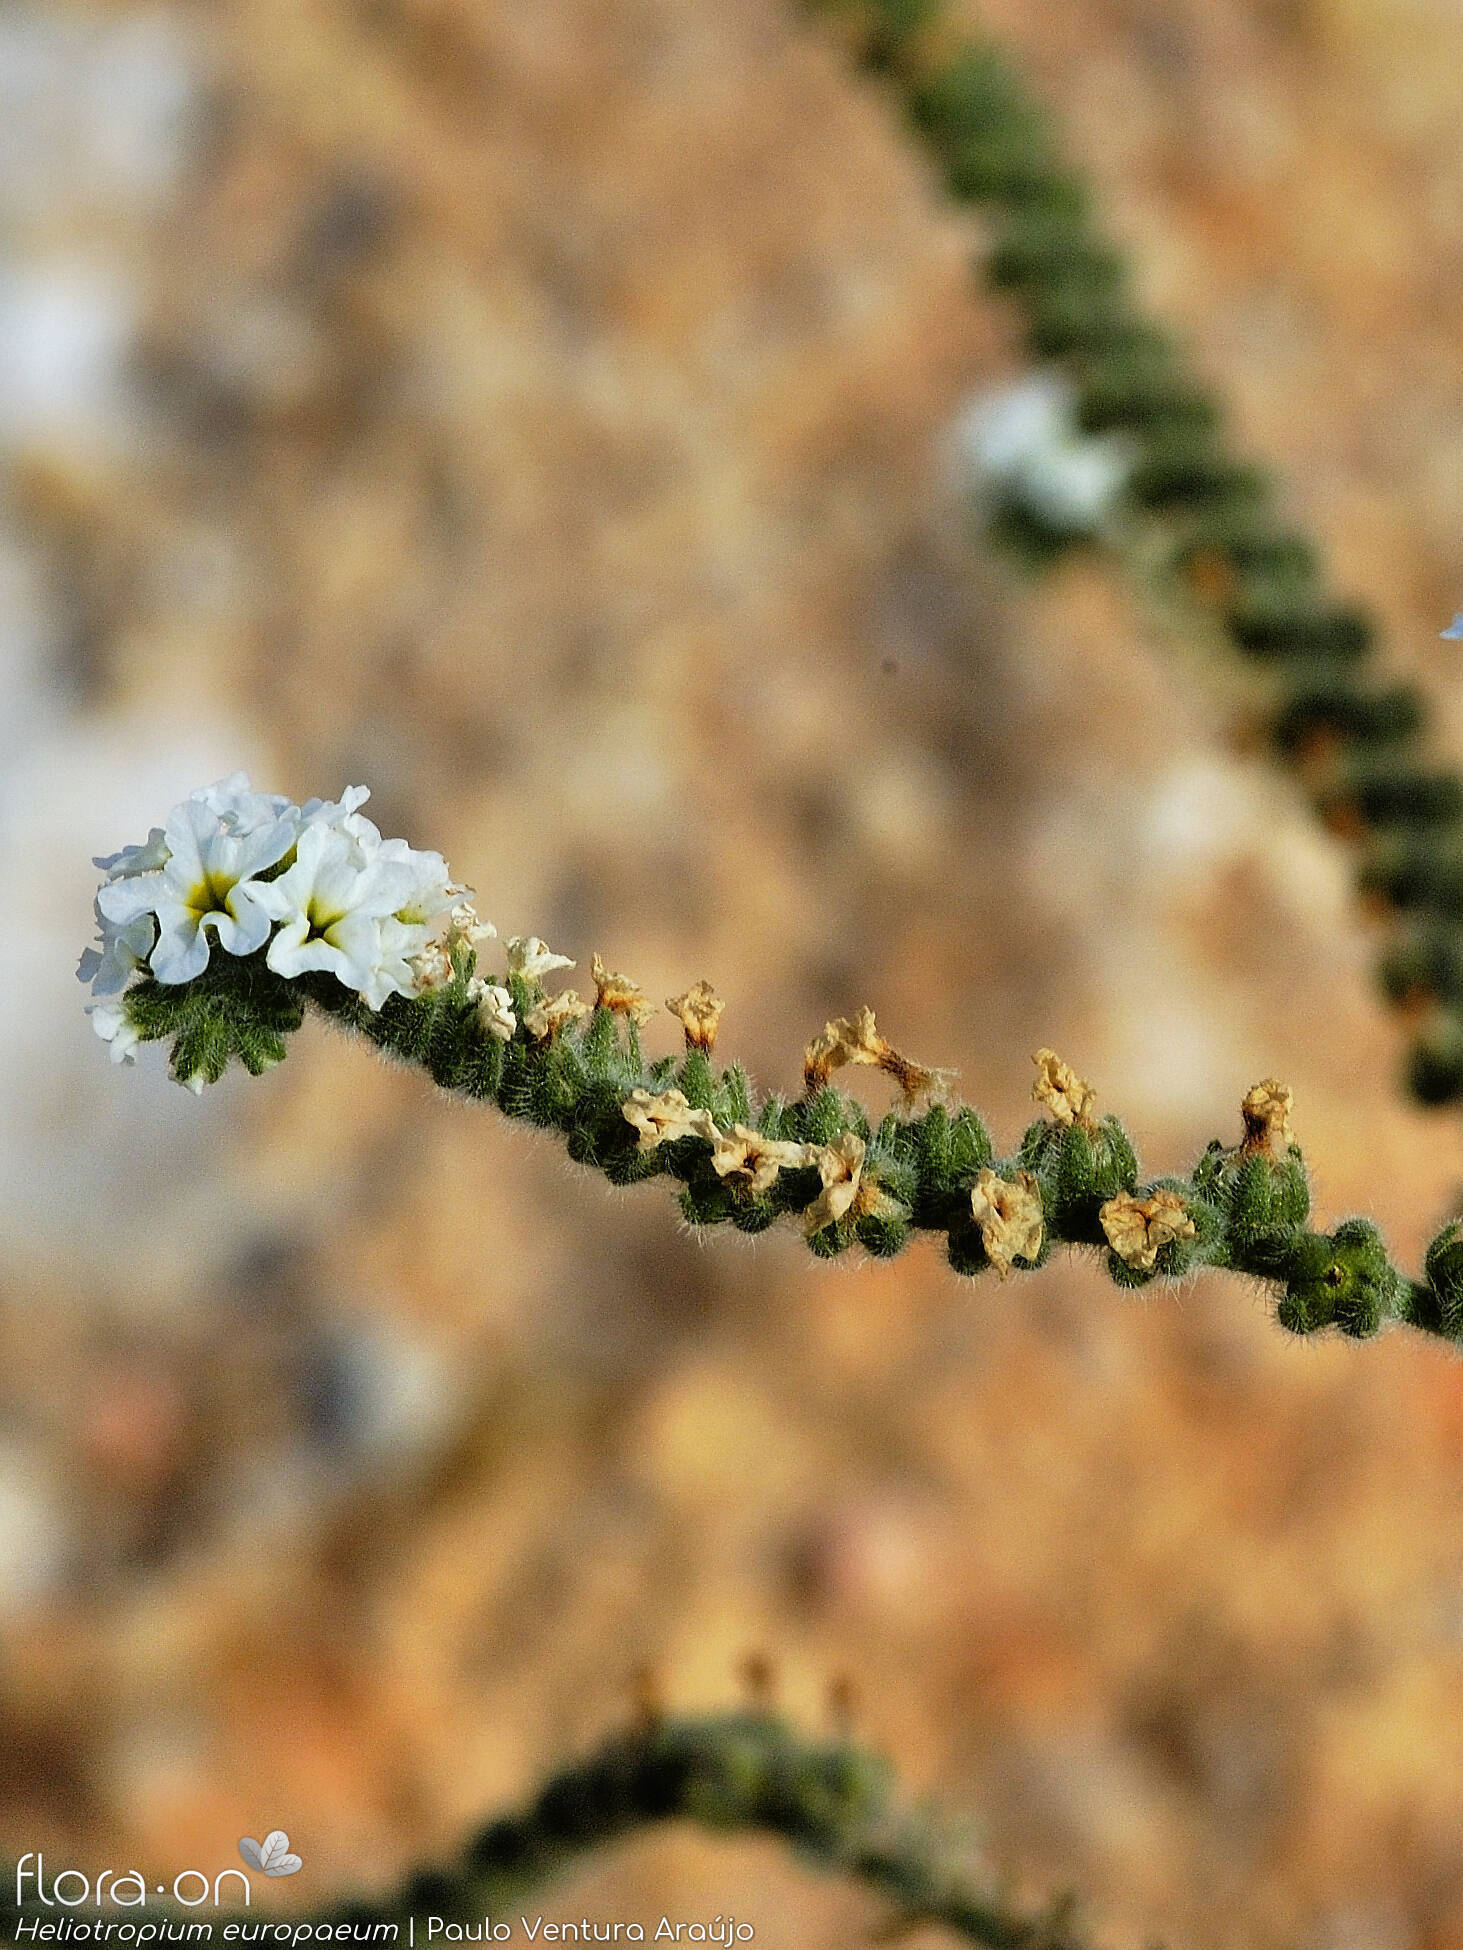 Heliotropium europaeum - Flor (geral) | Paulo Ventura Araújo; CC BY-NC 4.0